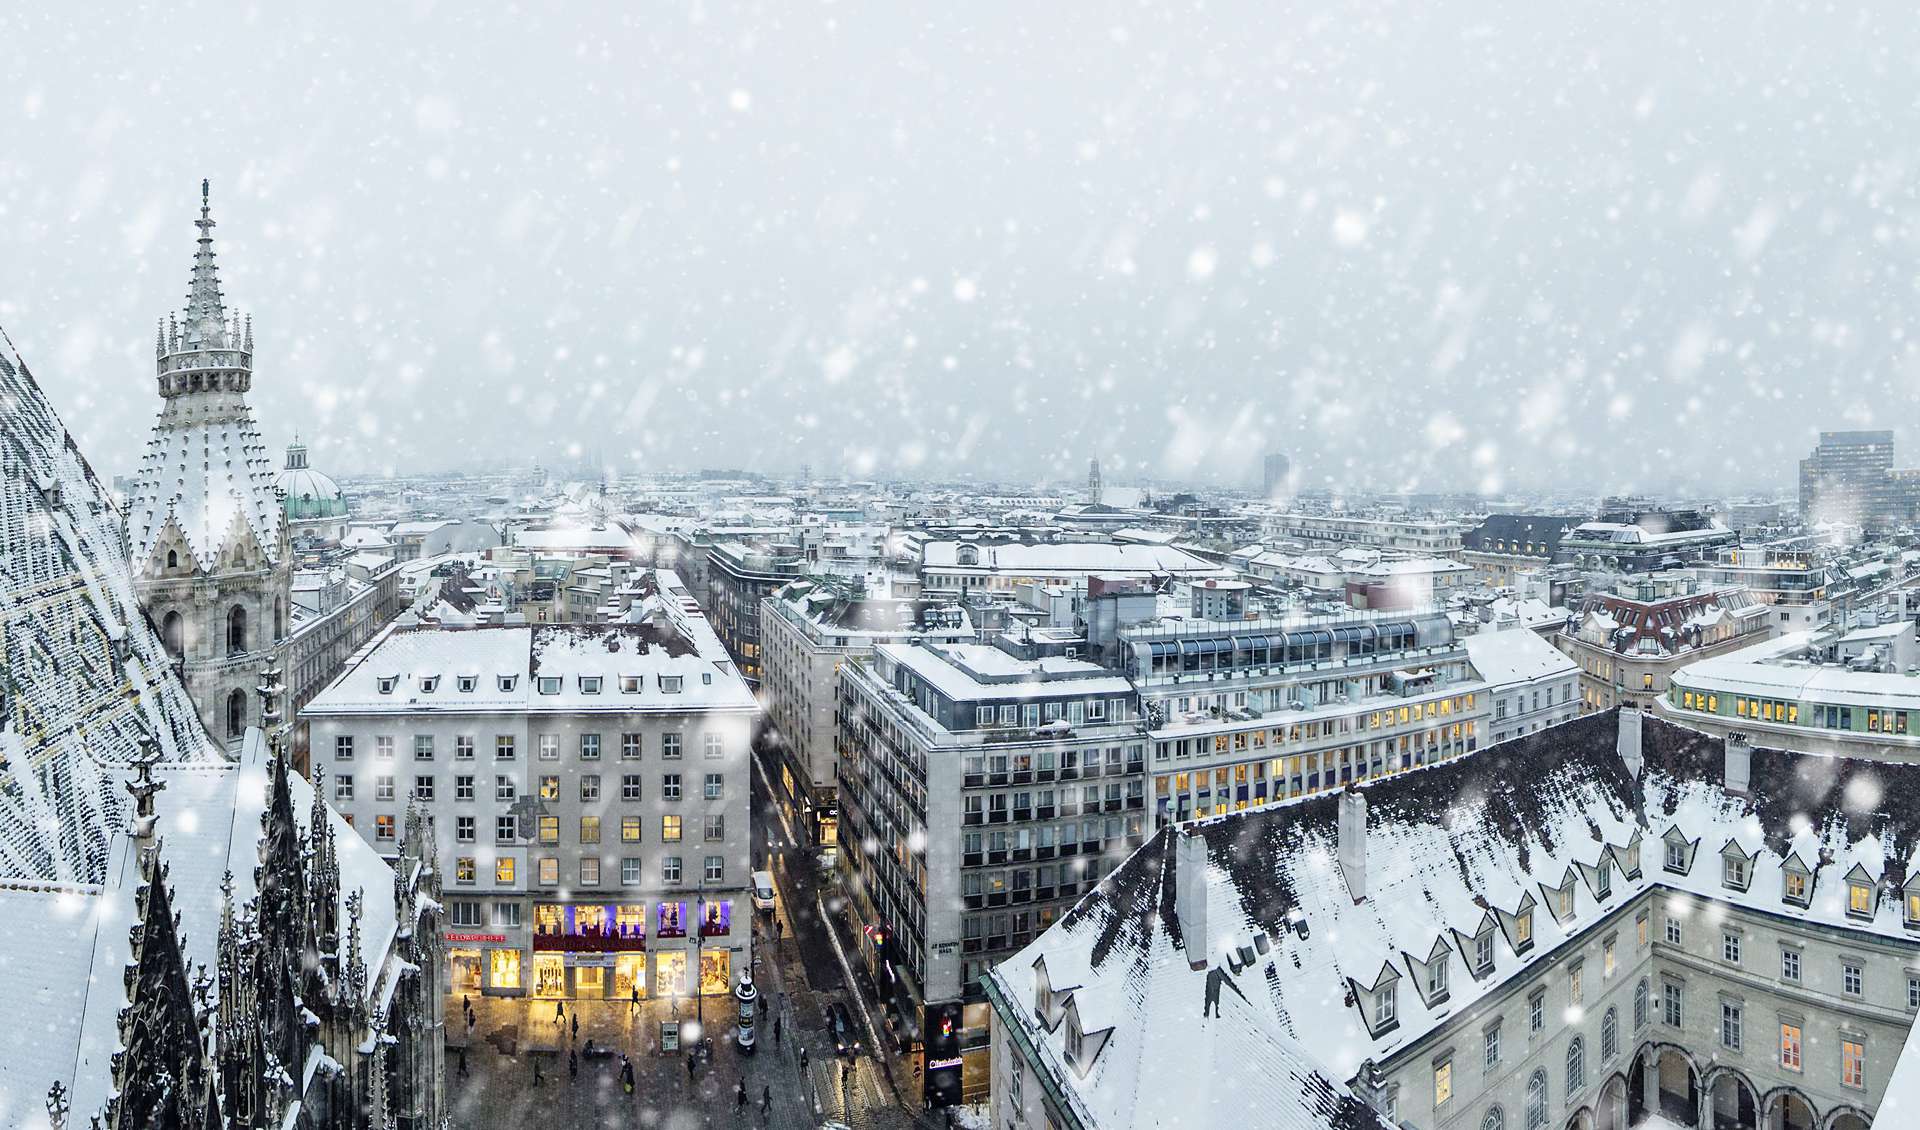 Vienna in January